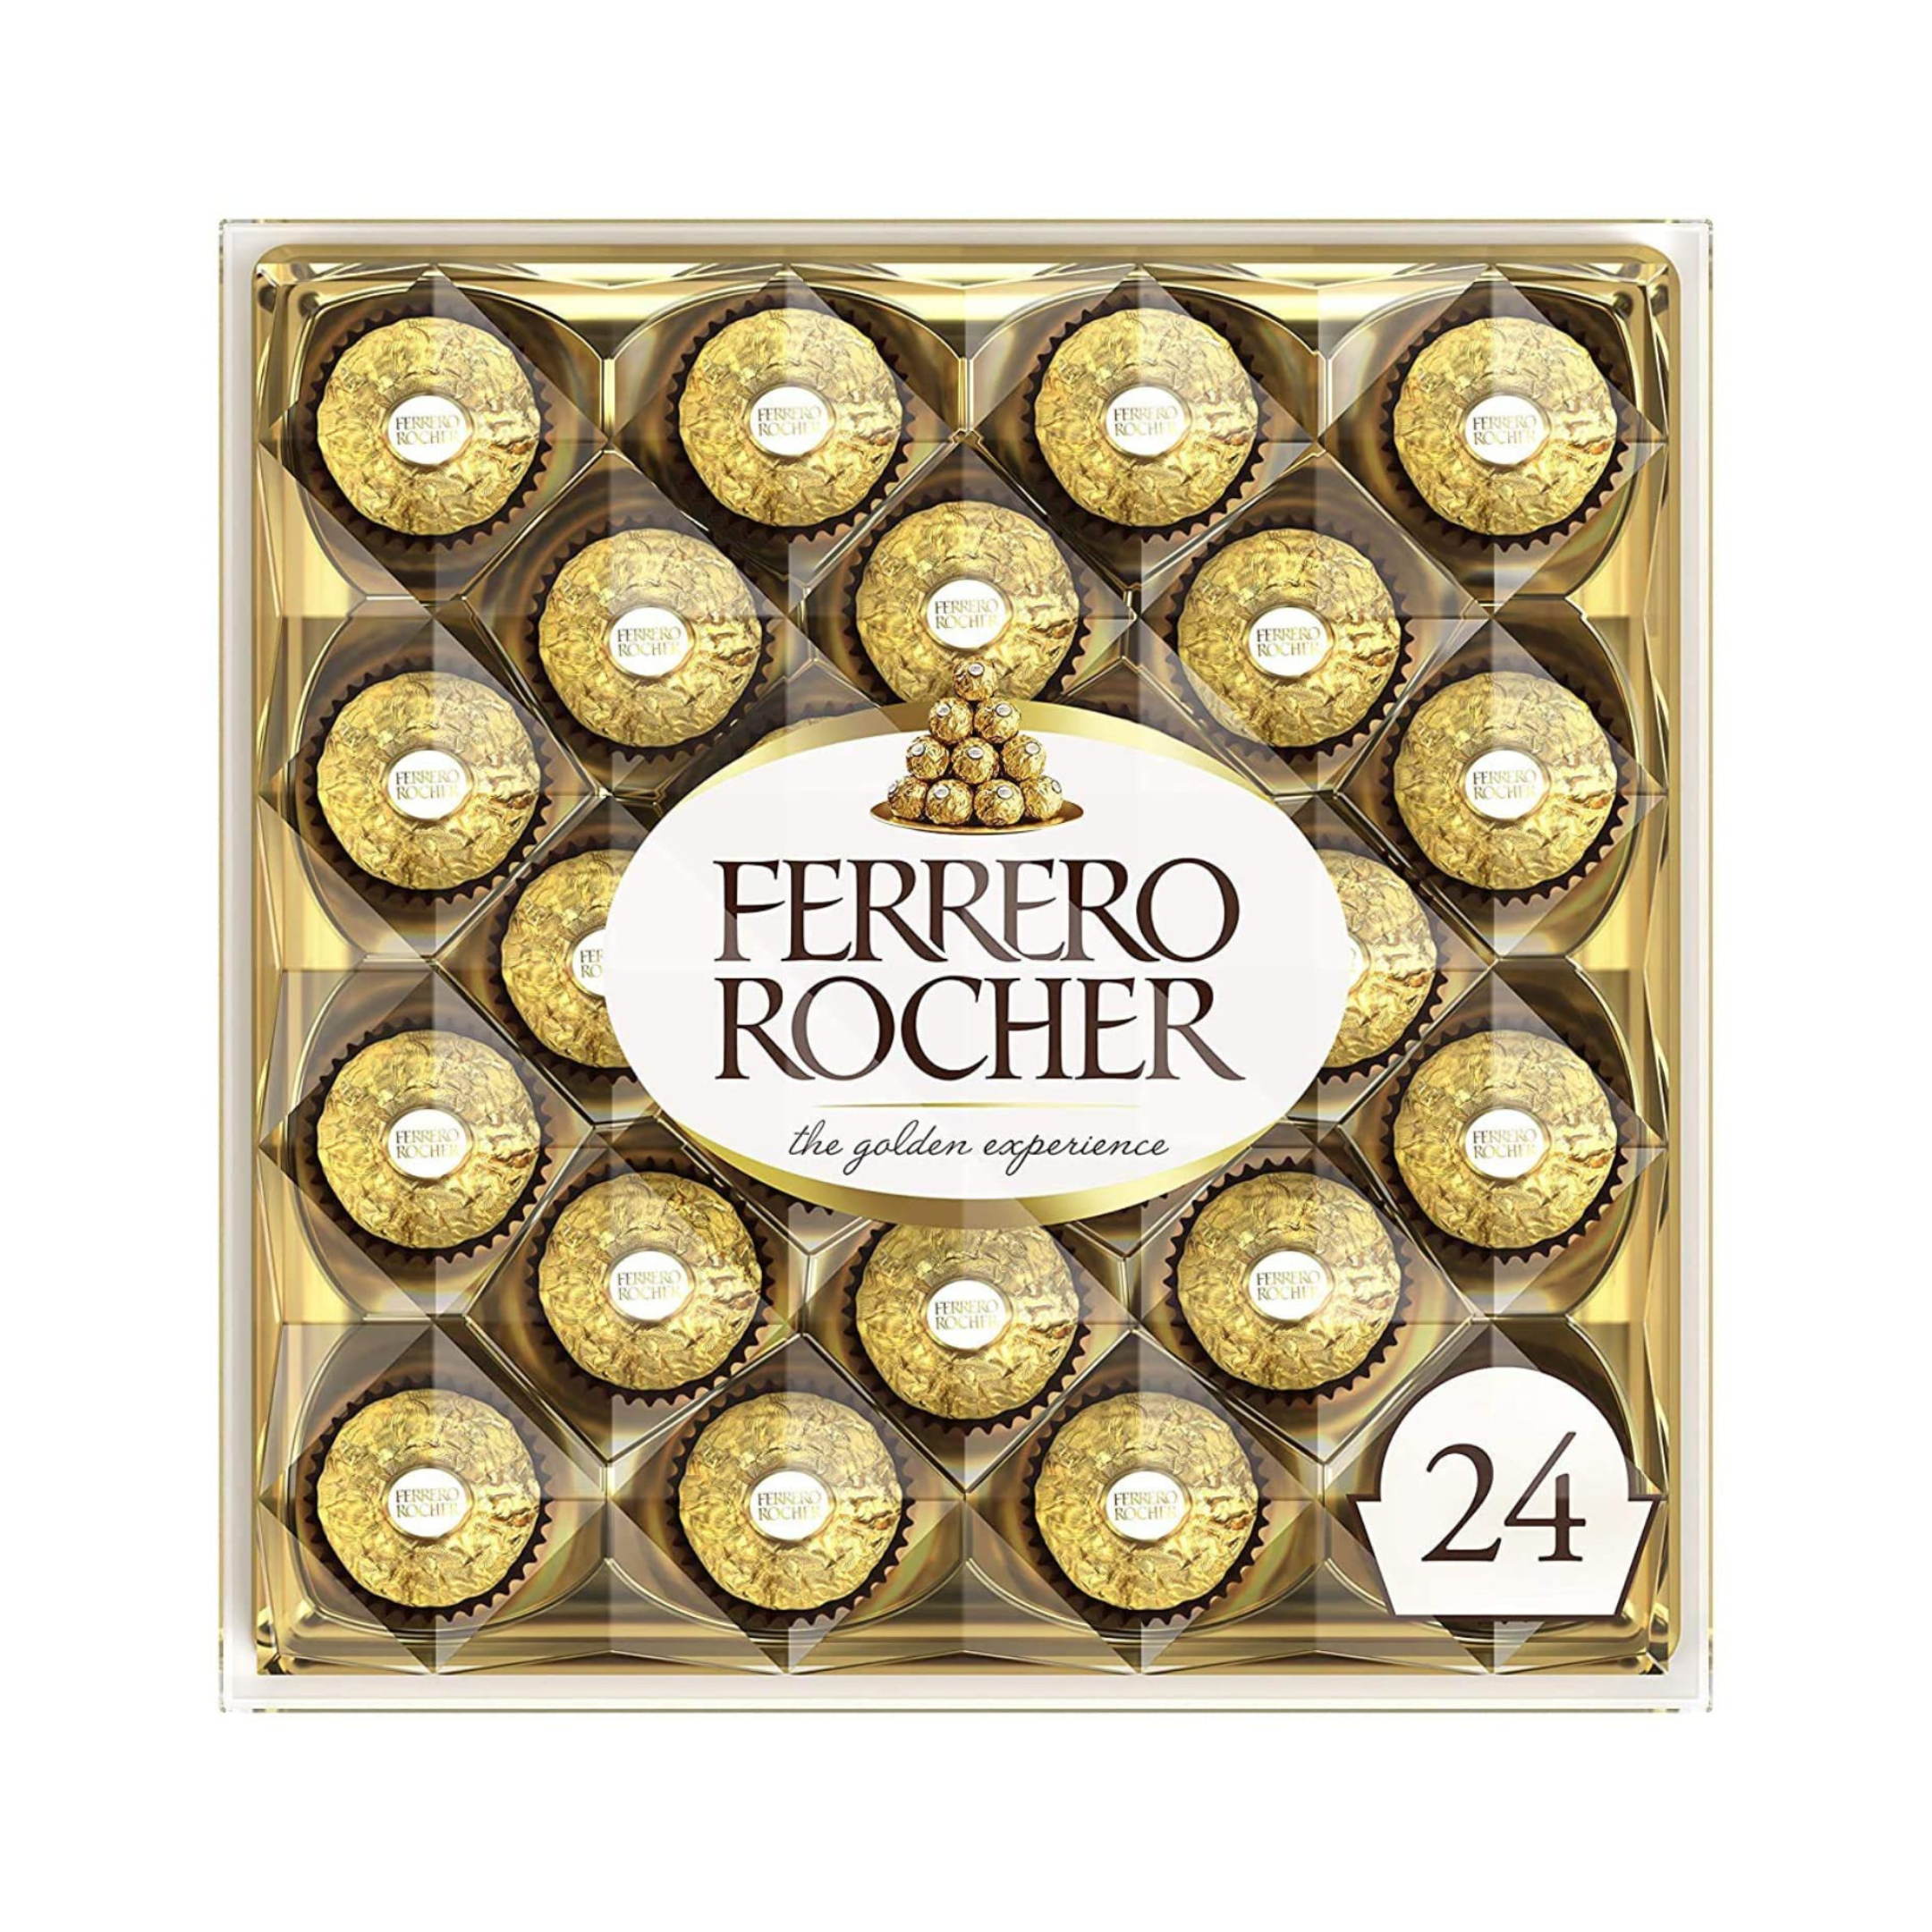 Ferrero Kinder Schoko Bons 300g (Pack of 4)